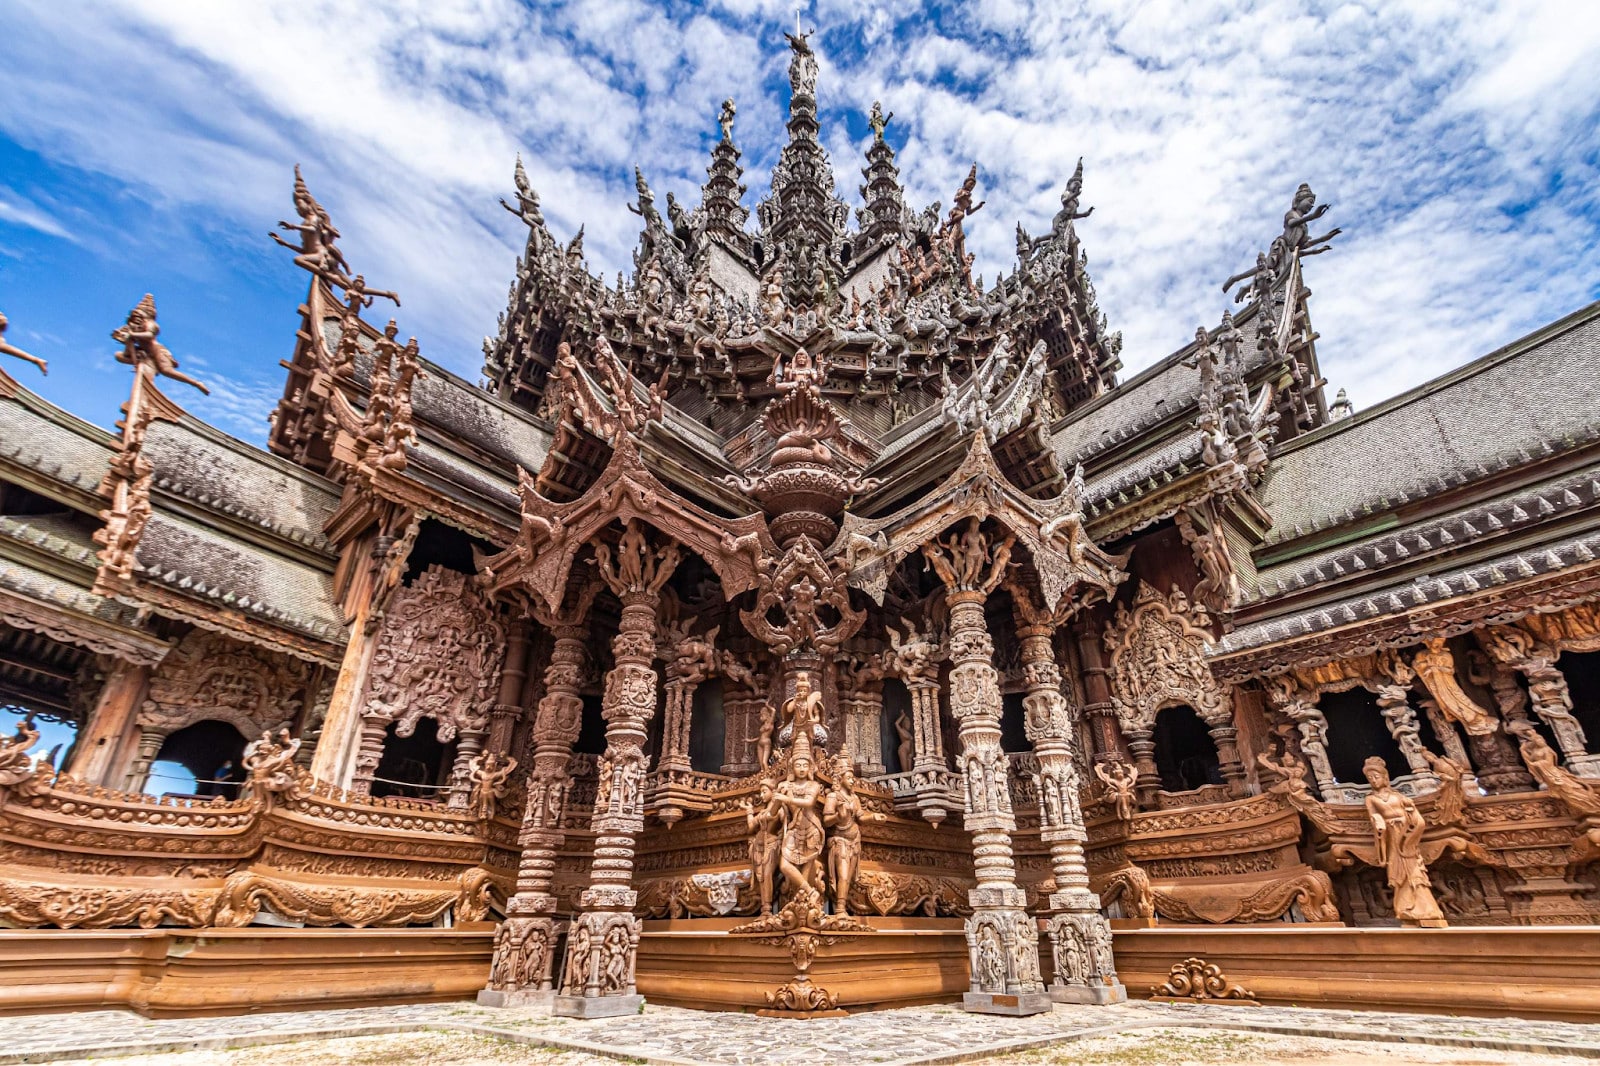 The Sanctuary of Truth in Pattaya, Bangkok